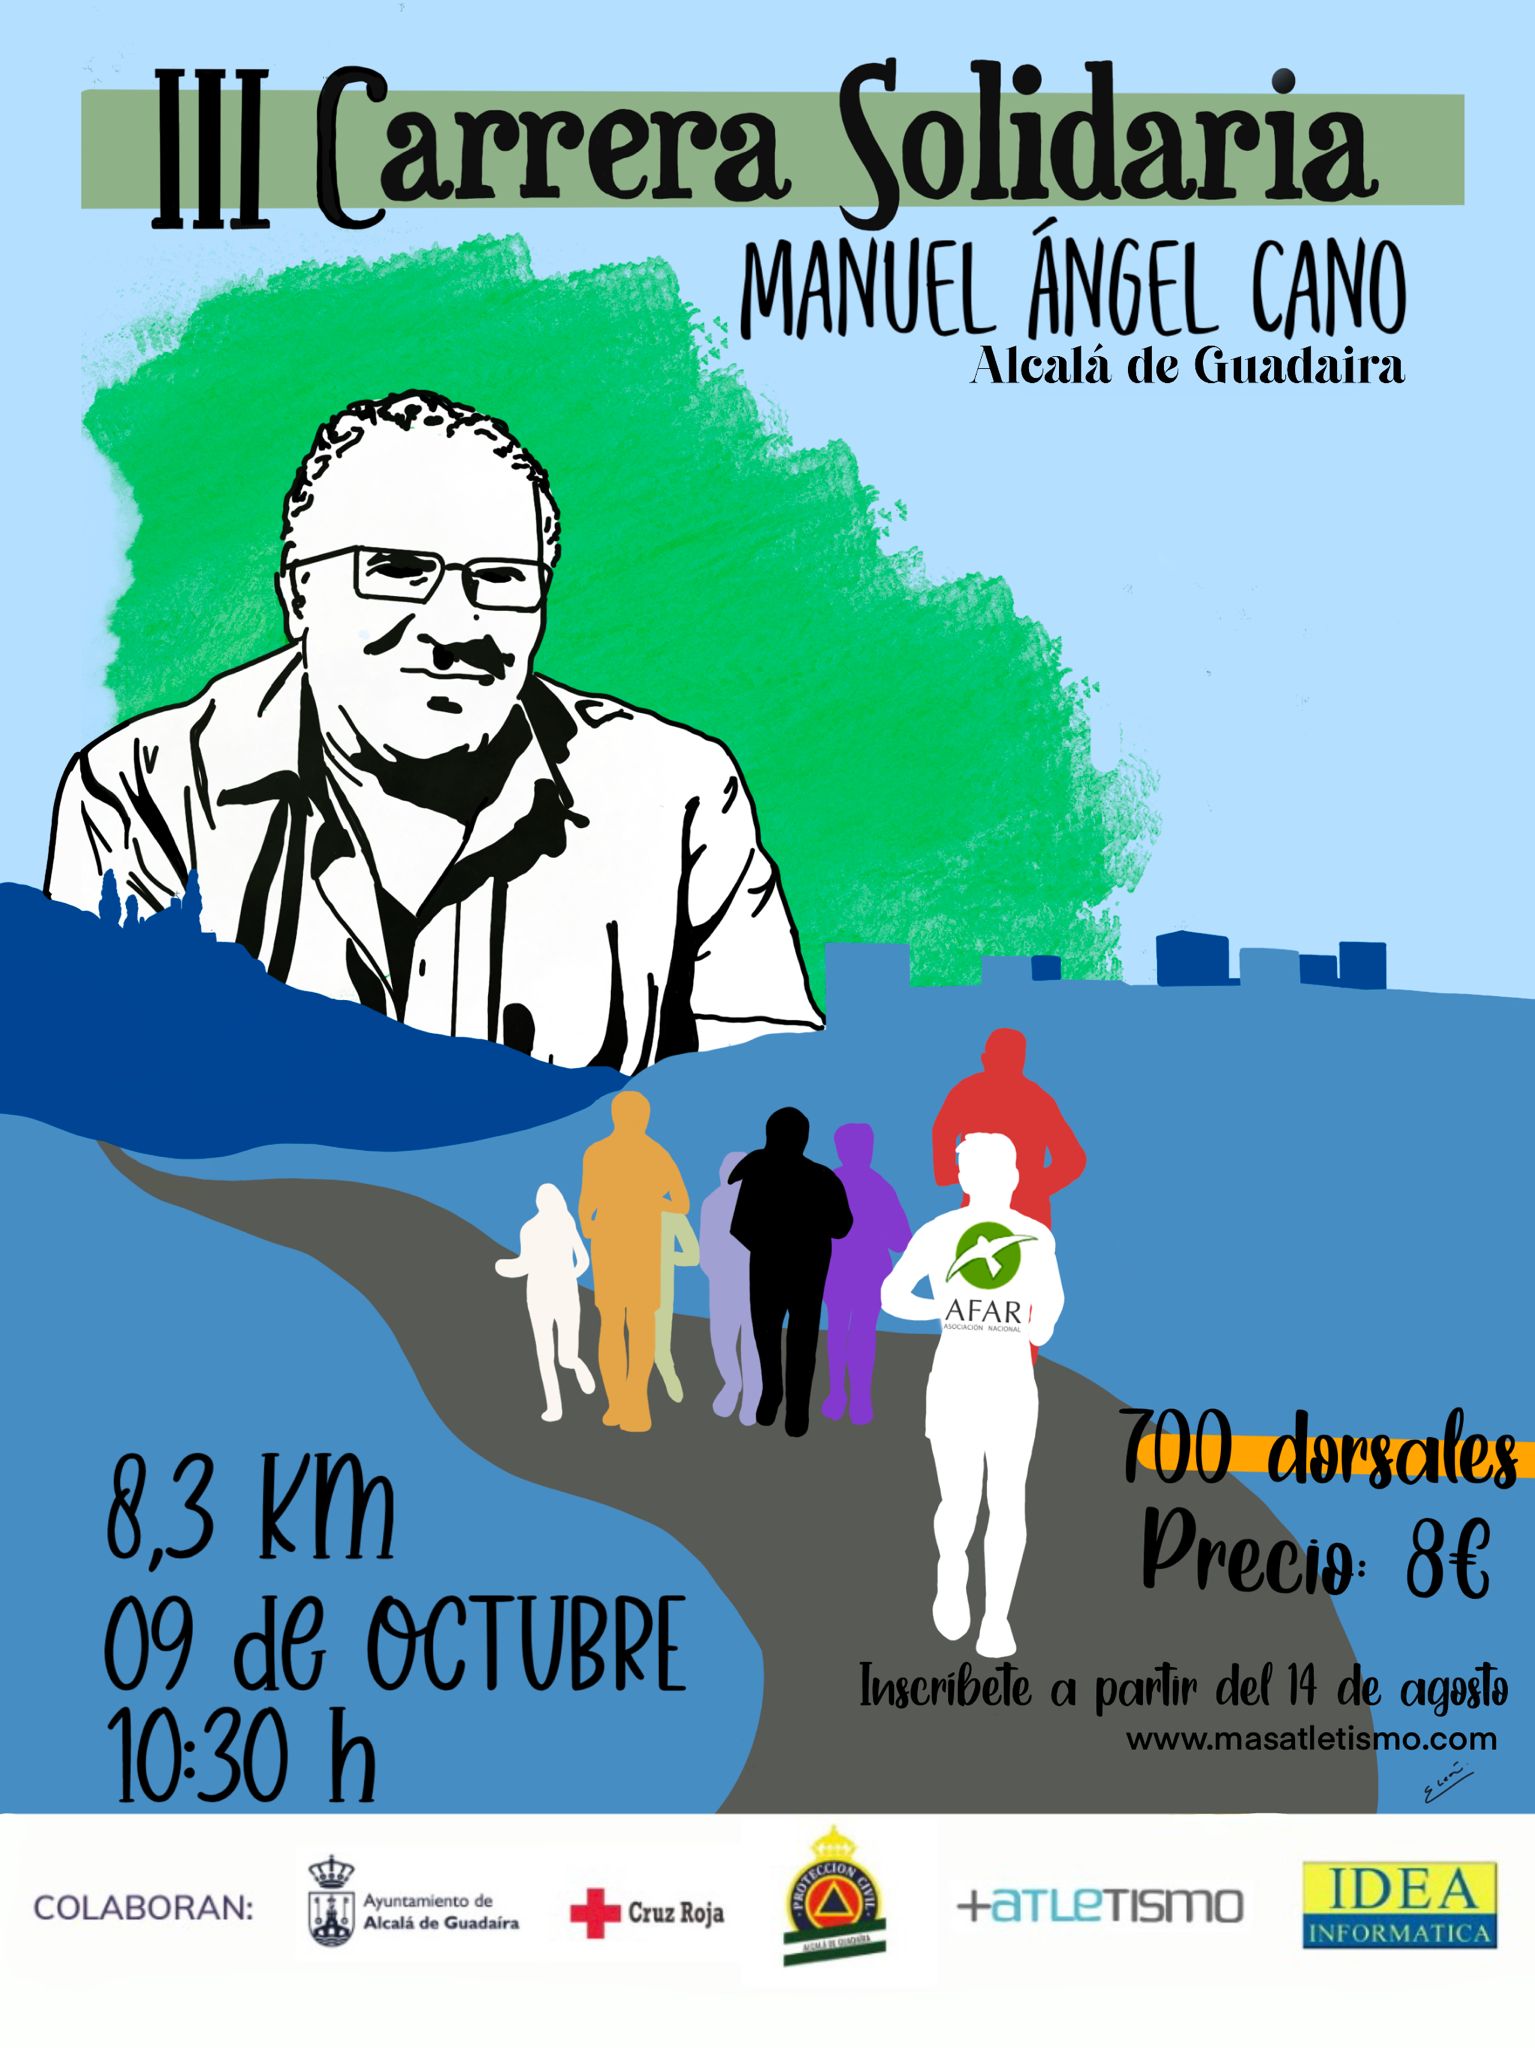 III CARRERA SOLIDARIA MANUEL ÁNGEL CANO, DORSAL 0